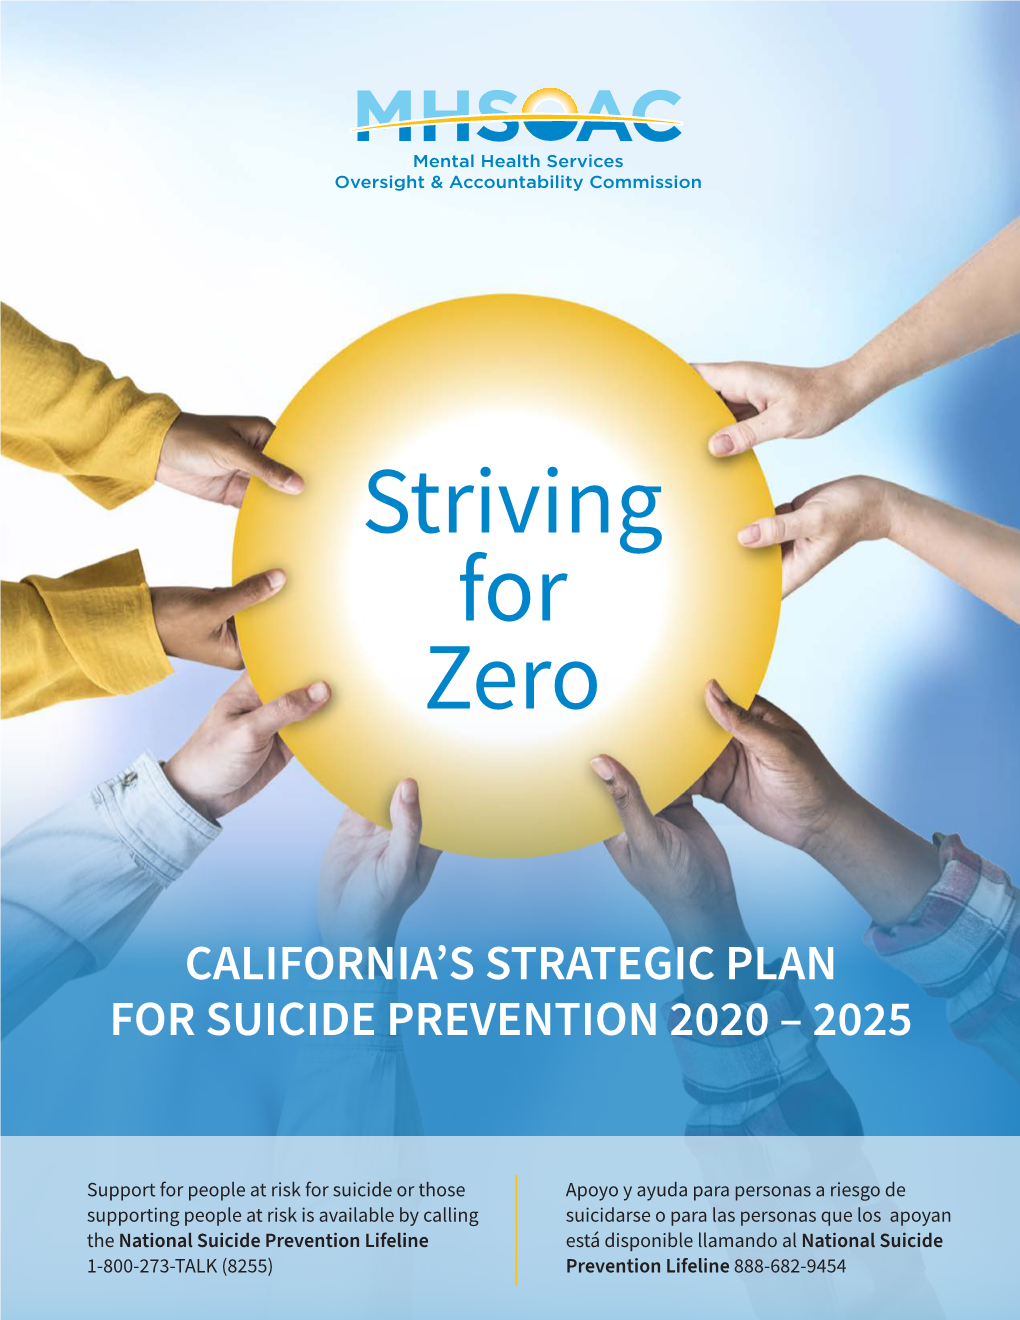 California's Strategic Plan for Suicide Prevention 2020-2025